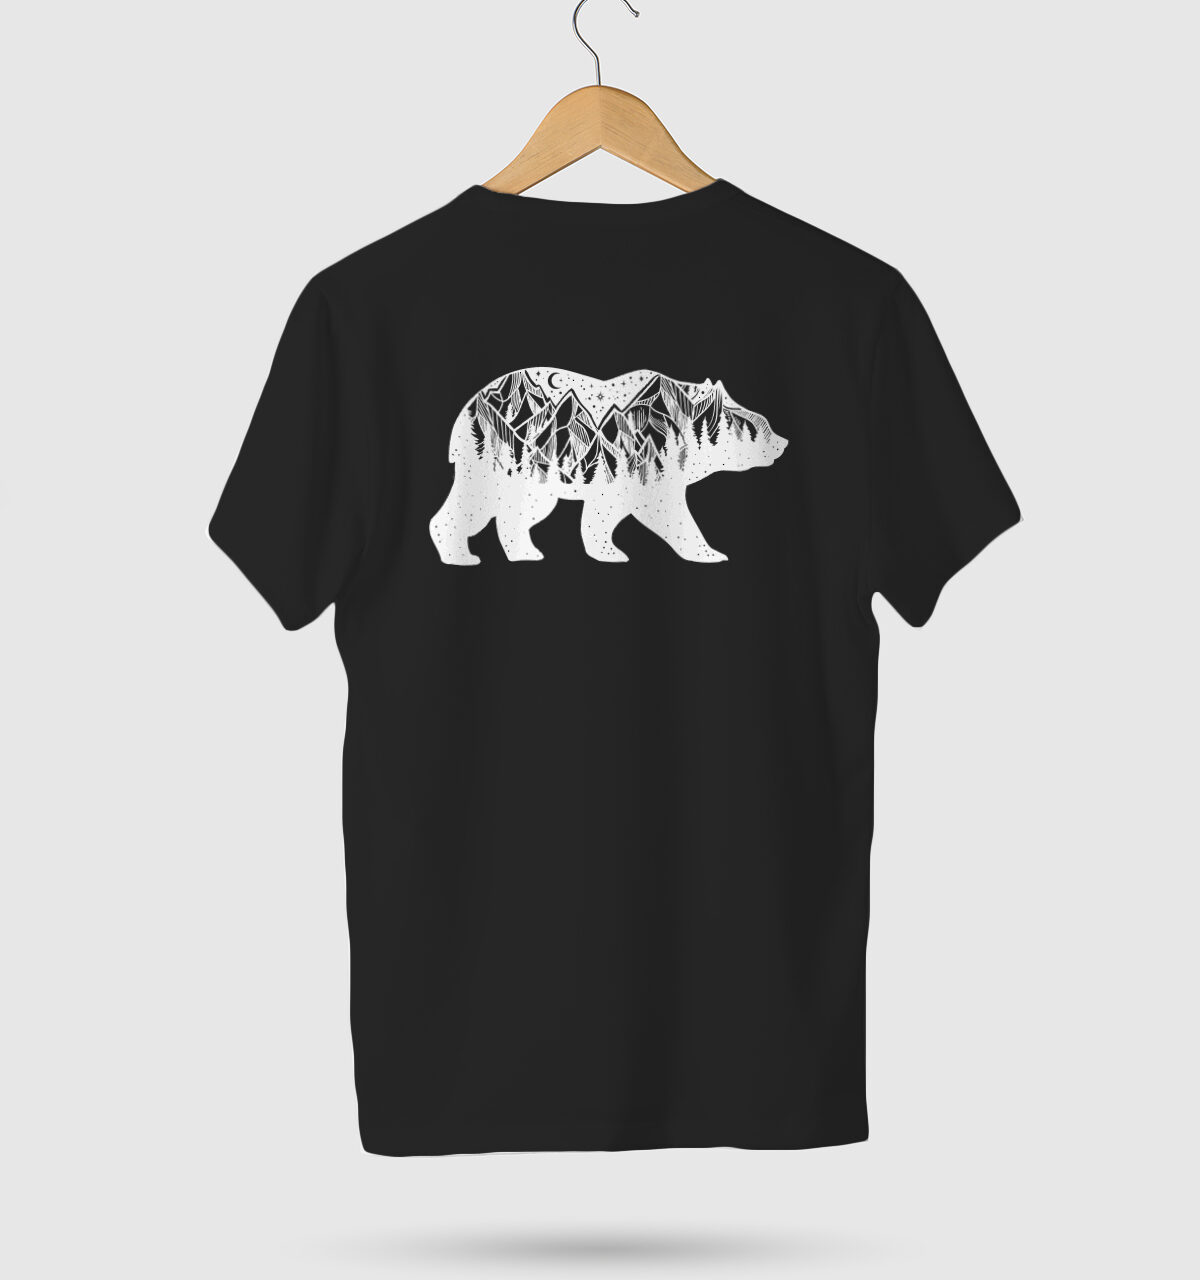 Bears That Roam T-Shirt